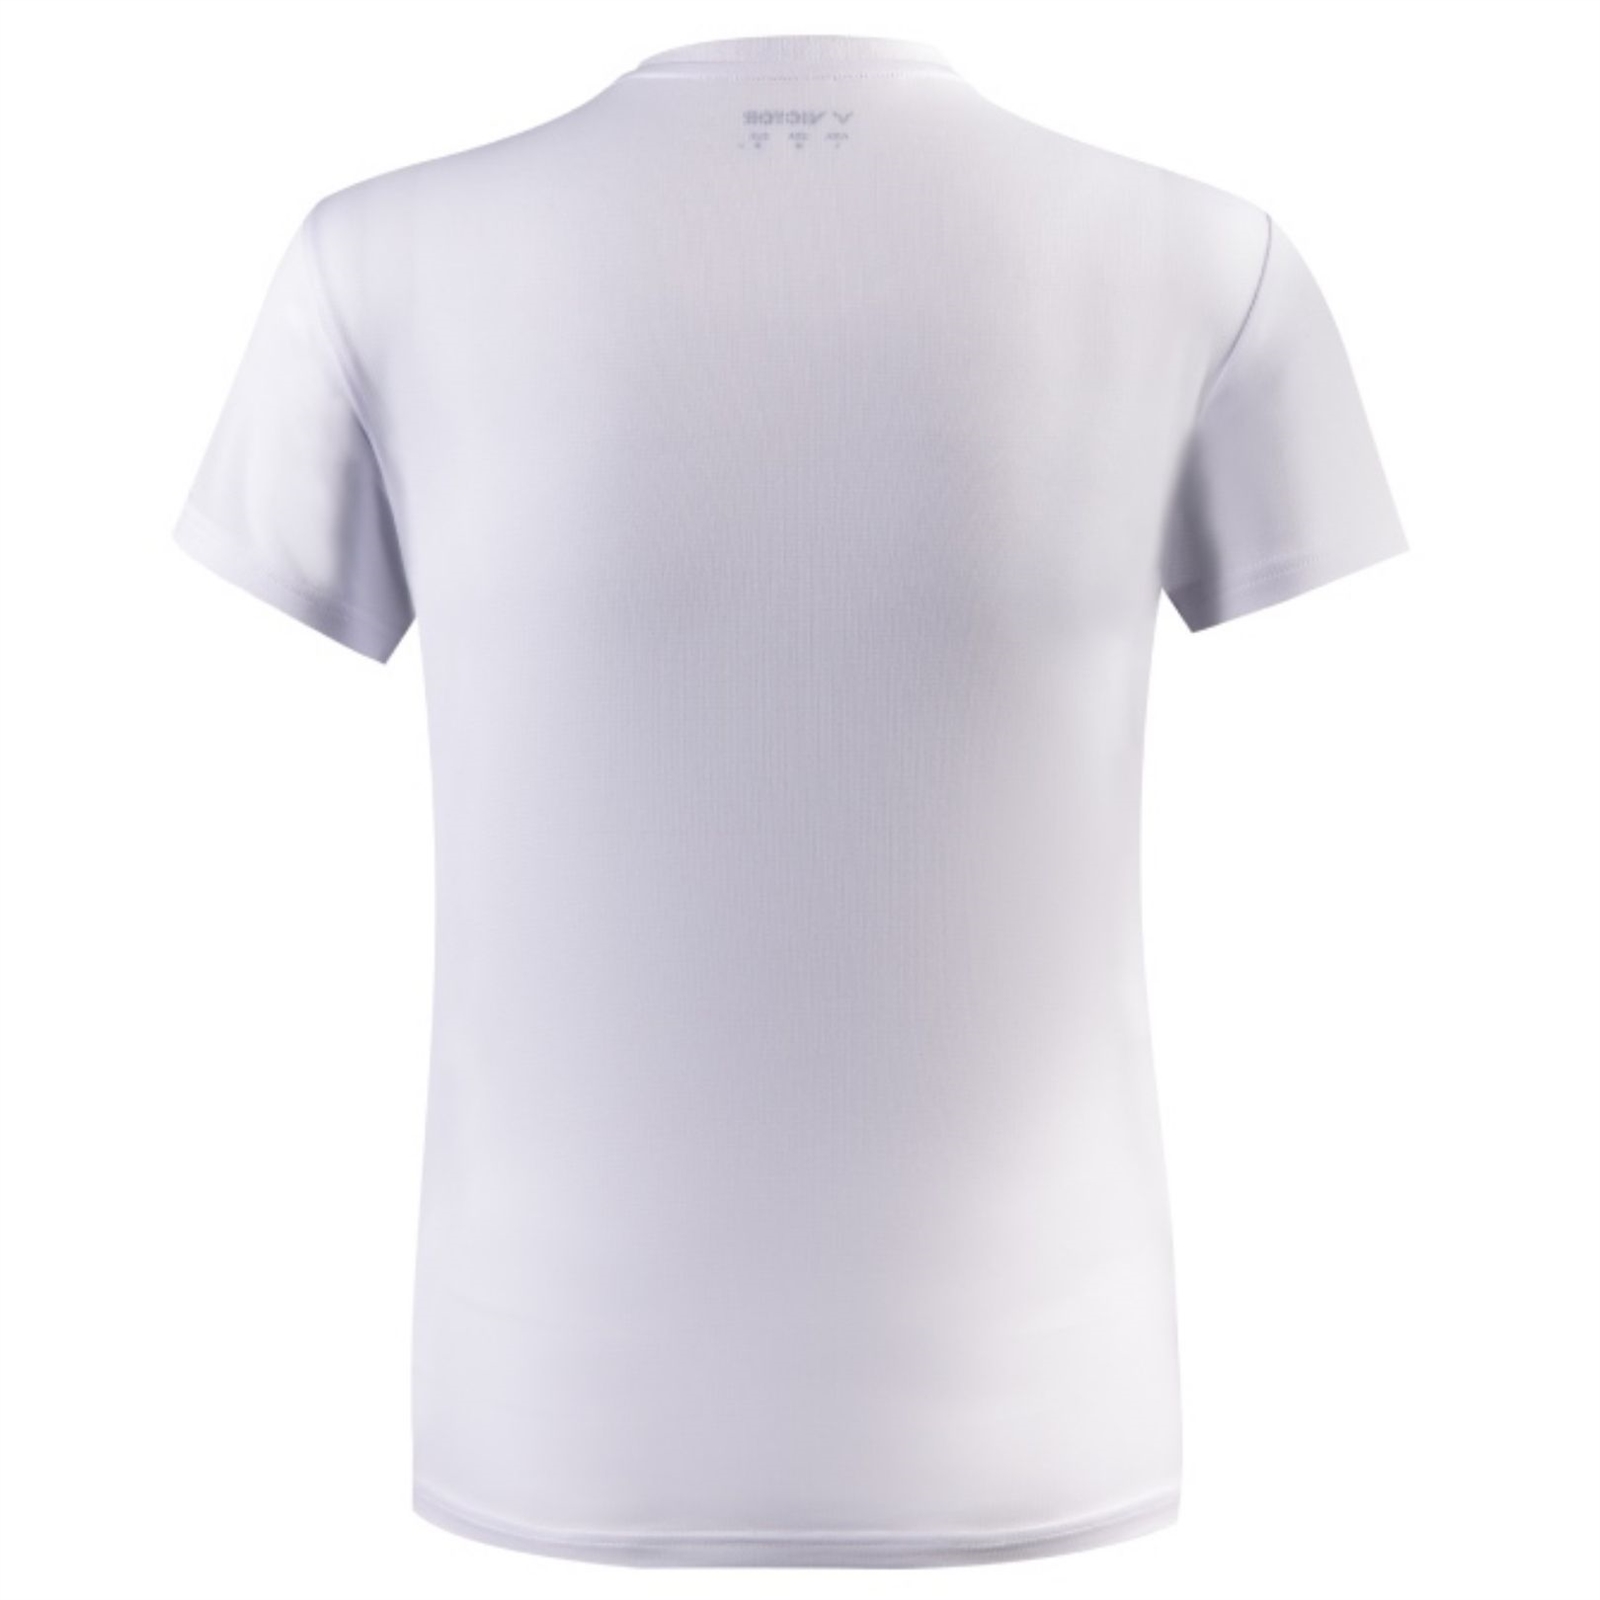 Victor T-Shirt → Badminton T-shirt - Buy here